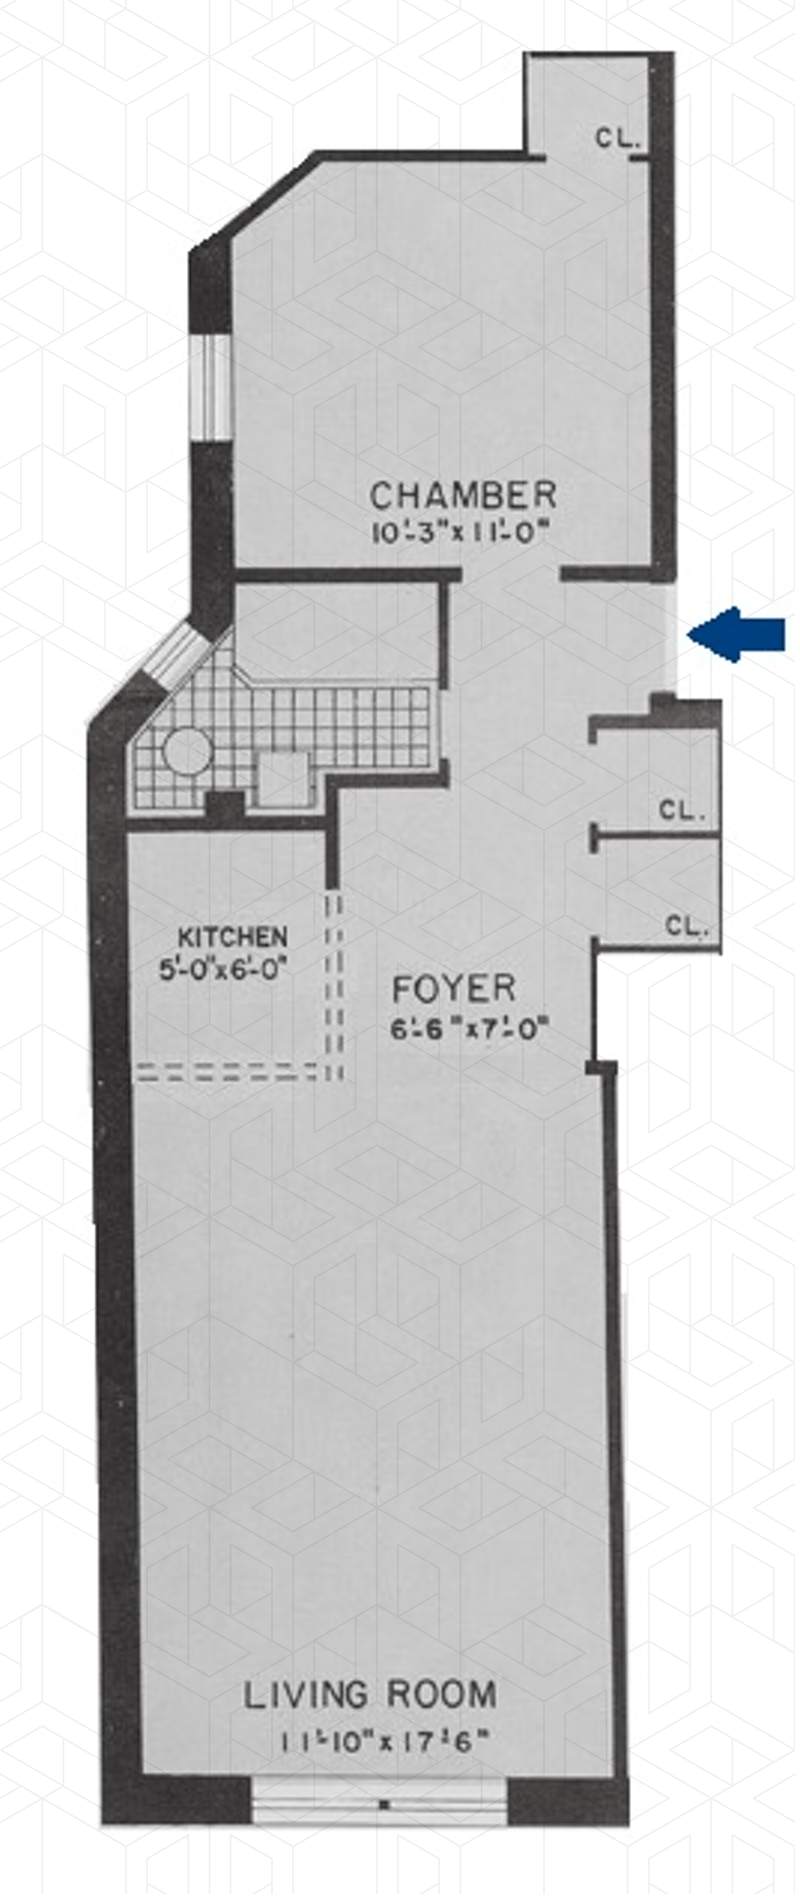 Floorplan for 534 East 88th Street